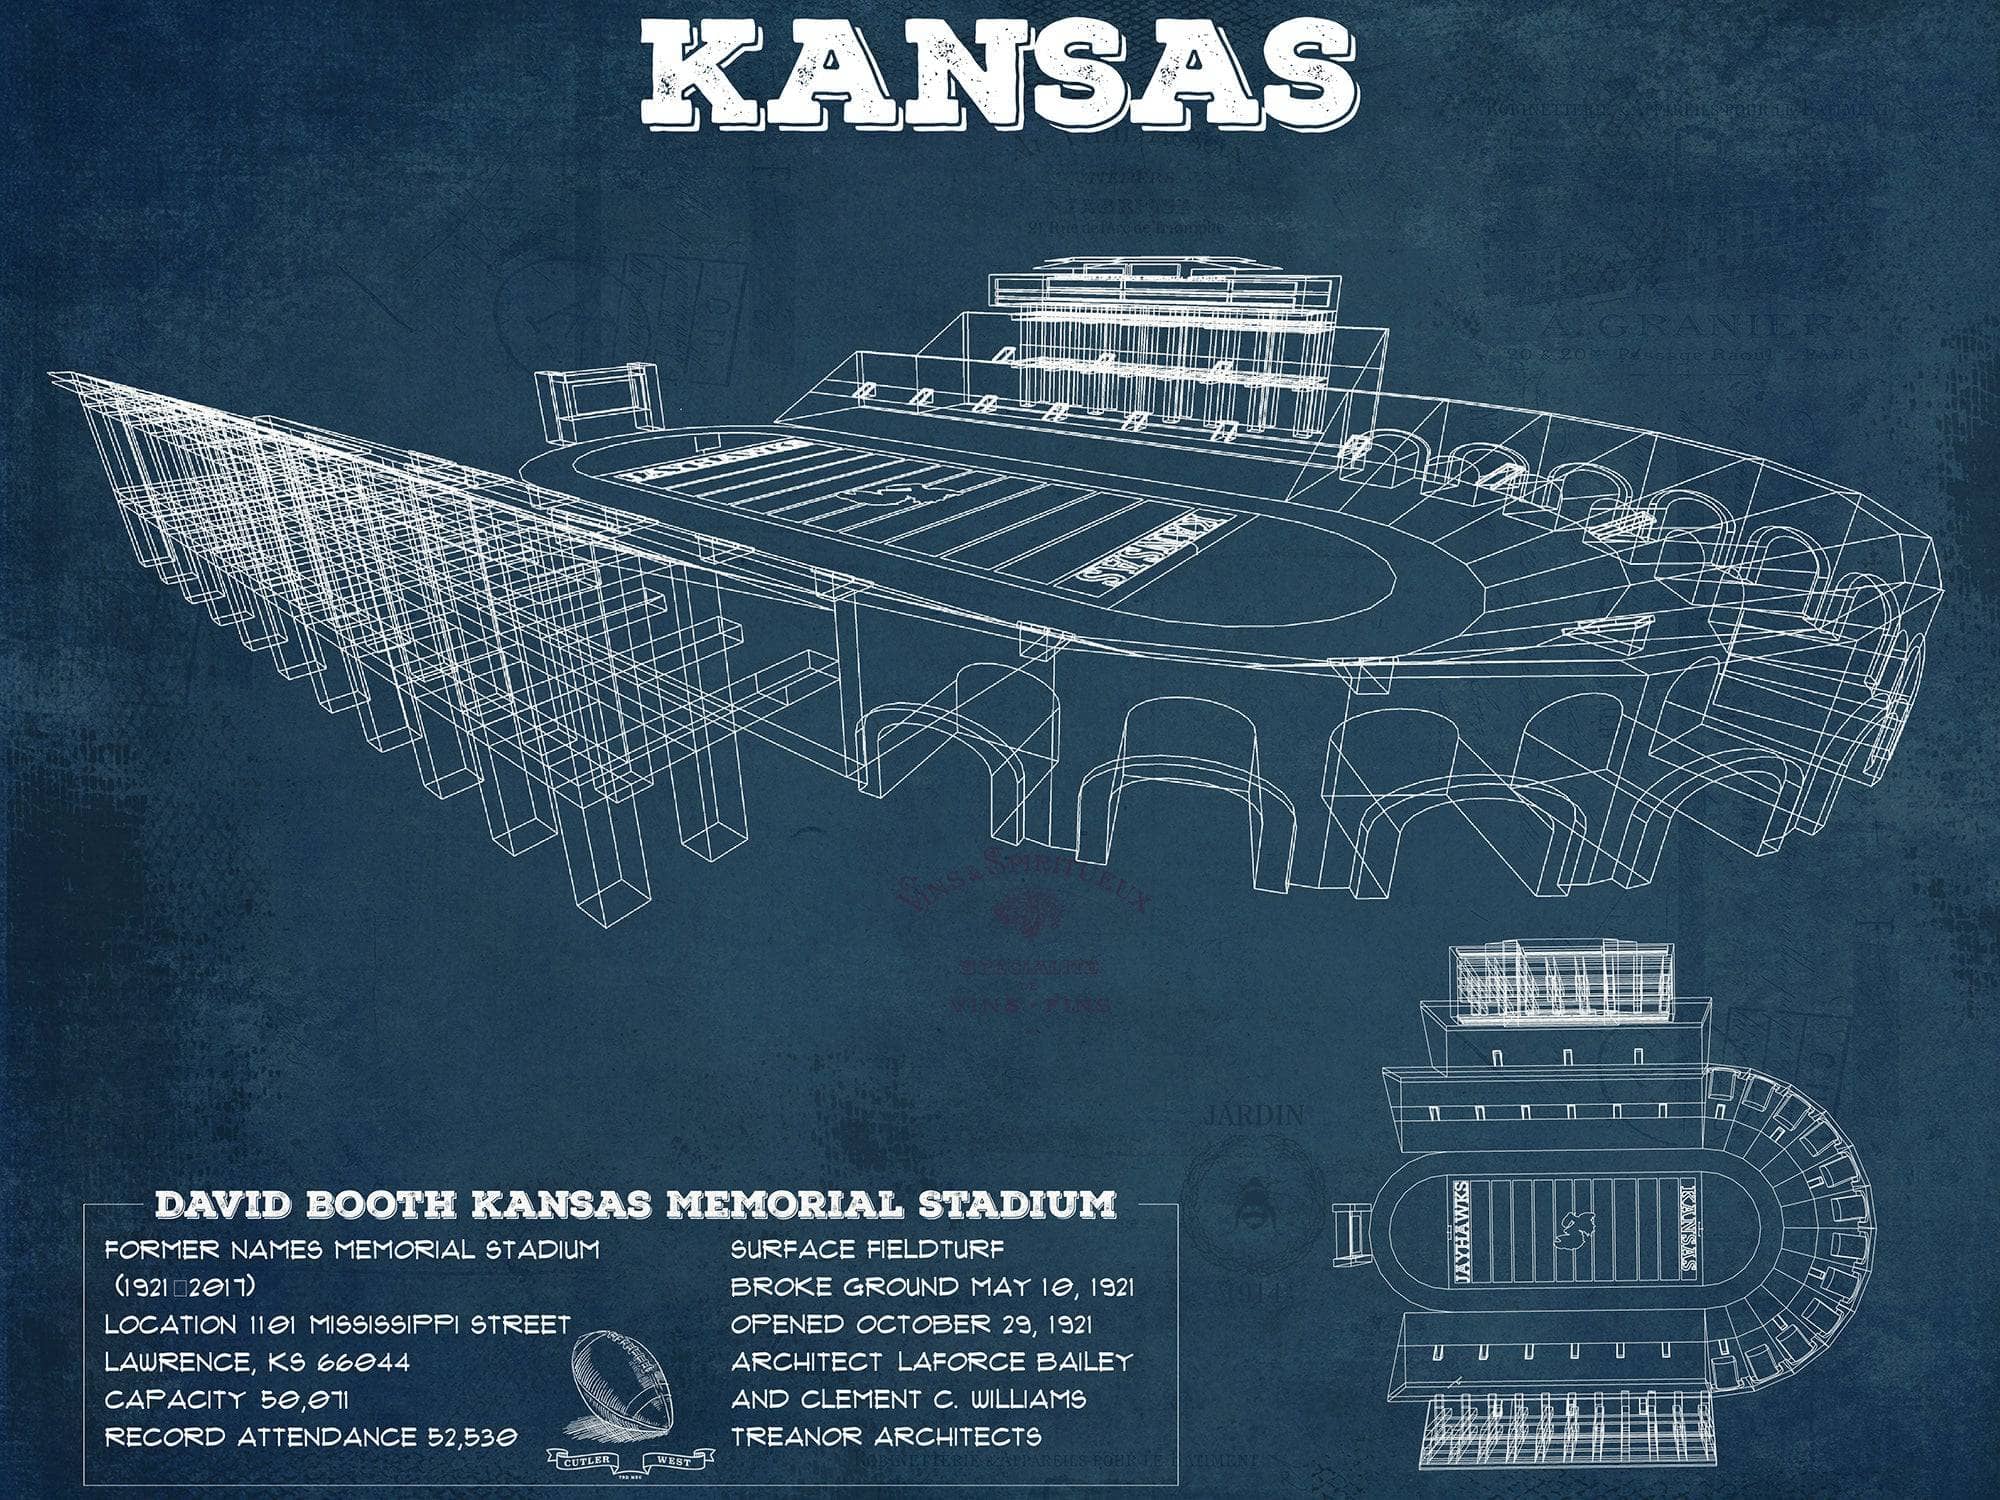 Cutler West College Football Collection 14" x 11" / Unframed Vintage Kansas Jayhawks Art - Kansas Memorial Stadium Blueprint Football Print 738926422-14"-x-11"56261